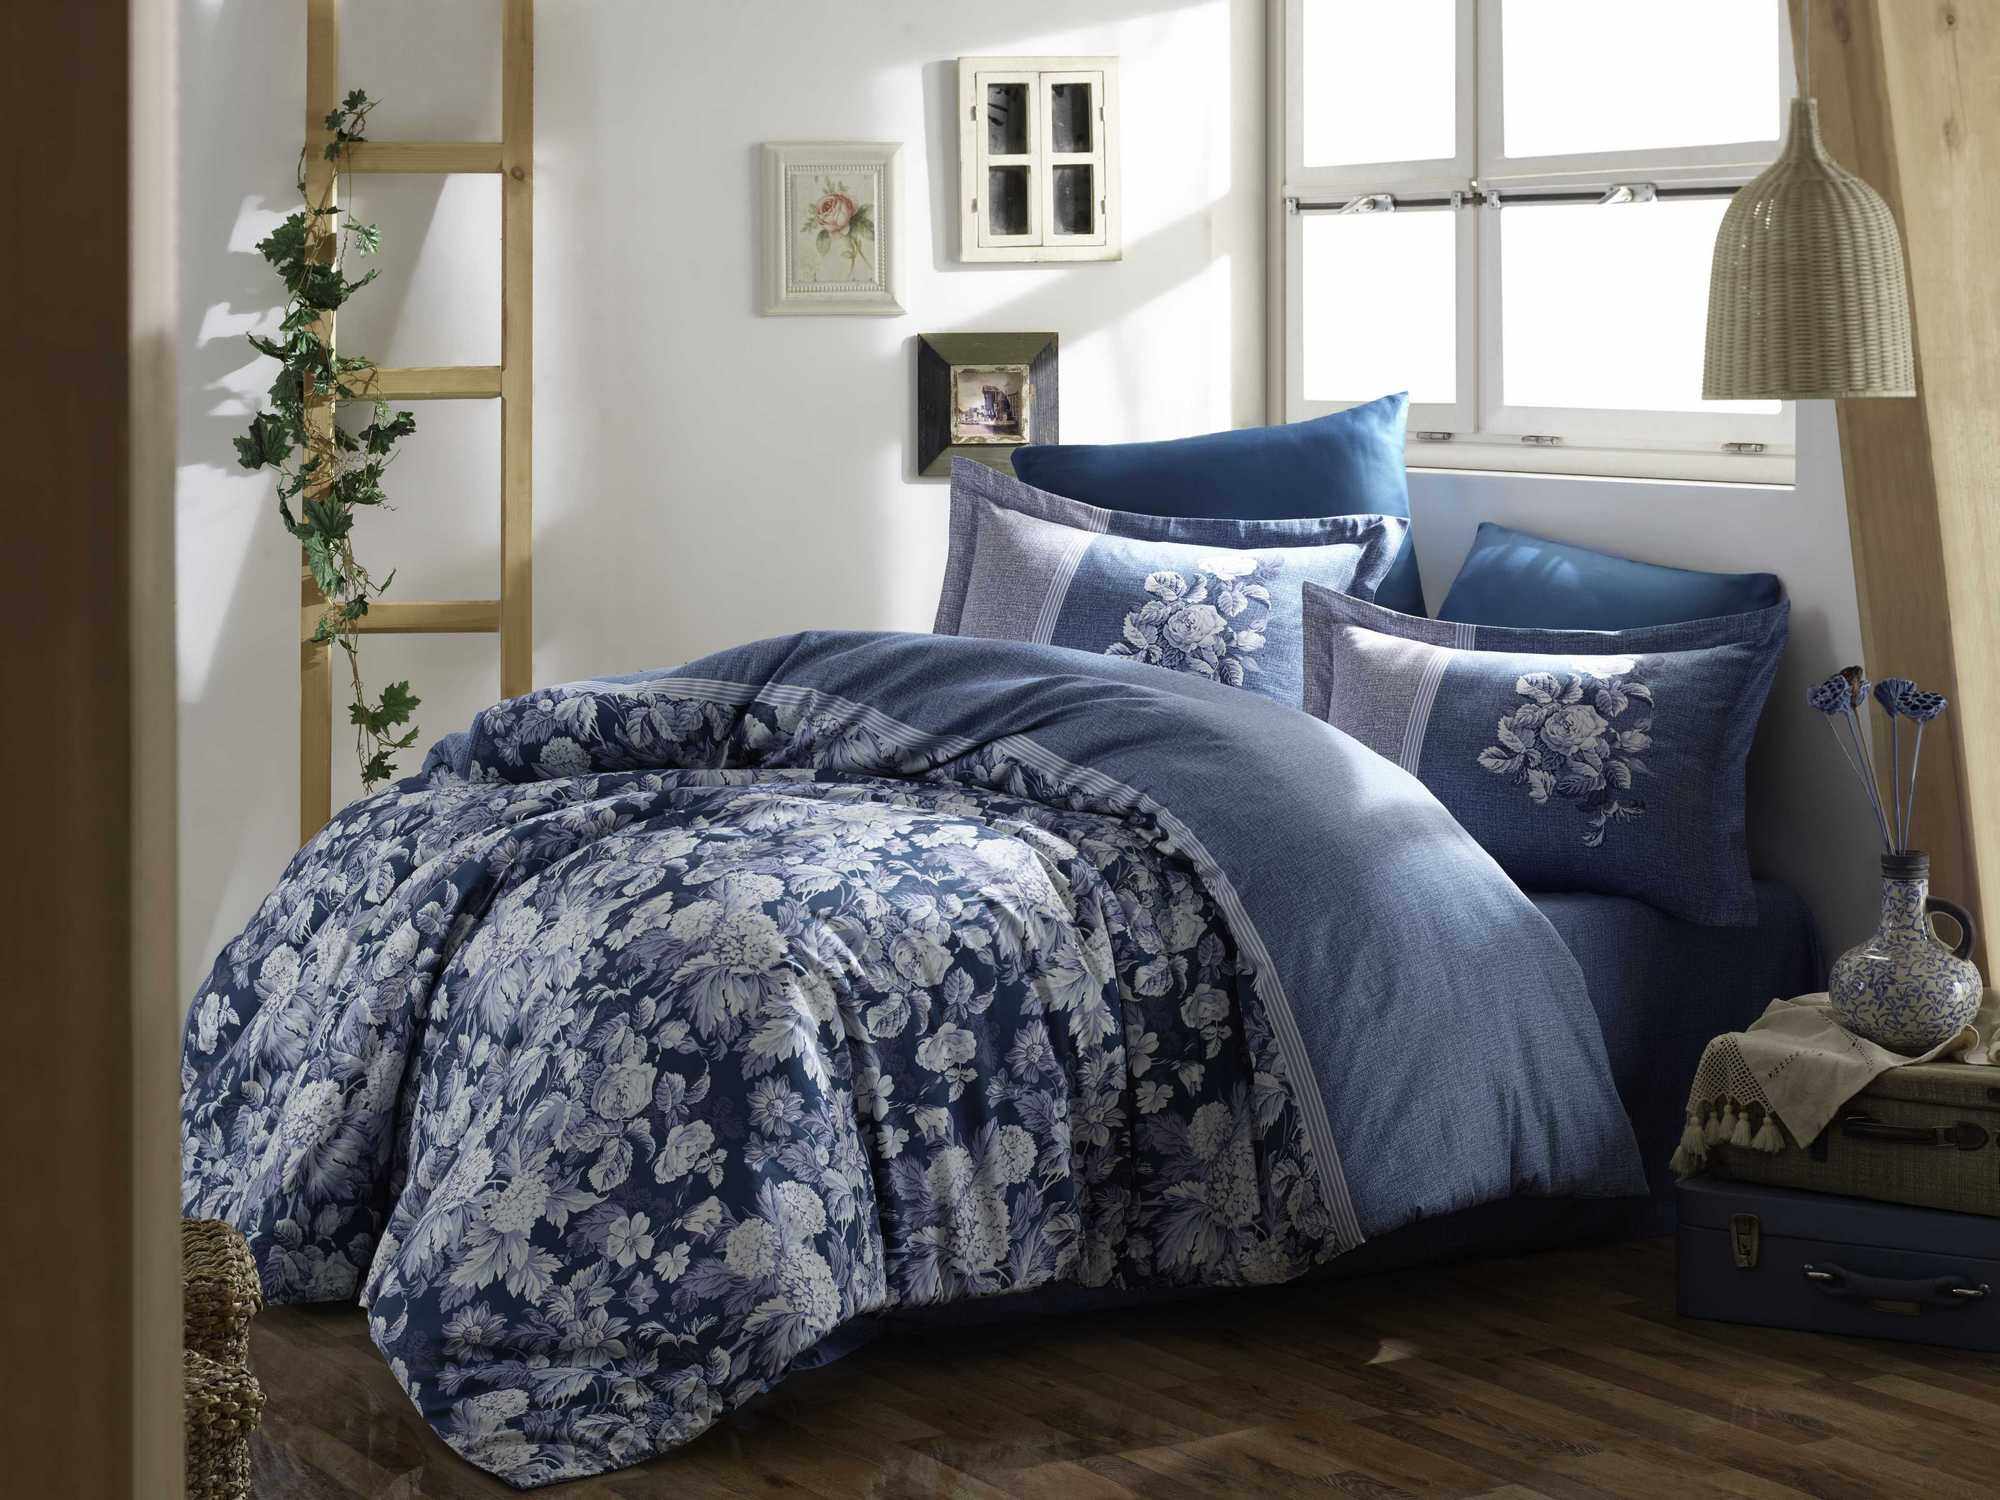 Lenjerie de pat din bumbac Satinat Amalia Albastru inchis, 200 x 220 cm